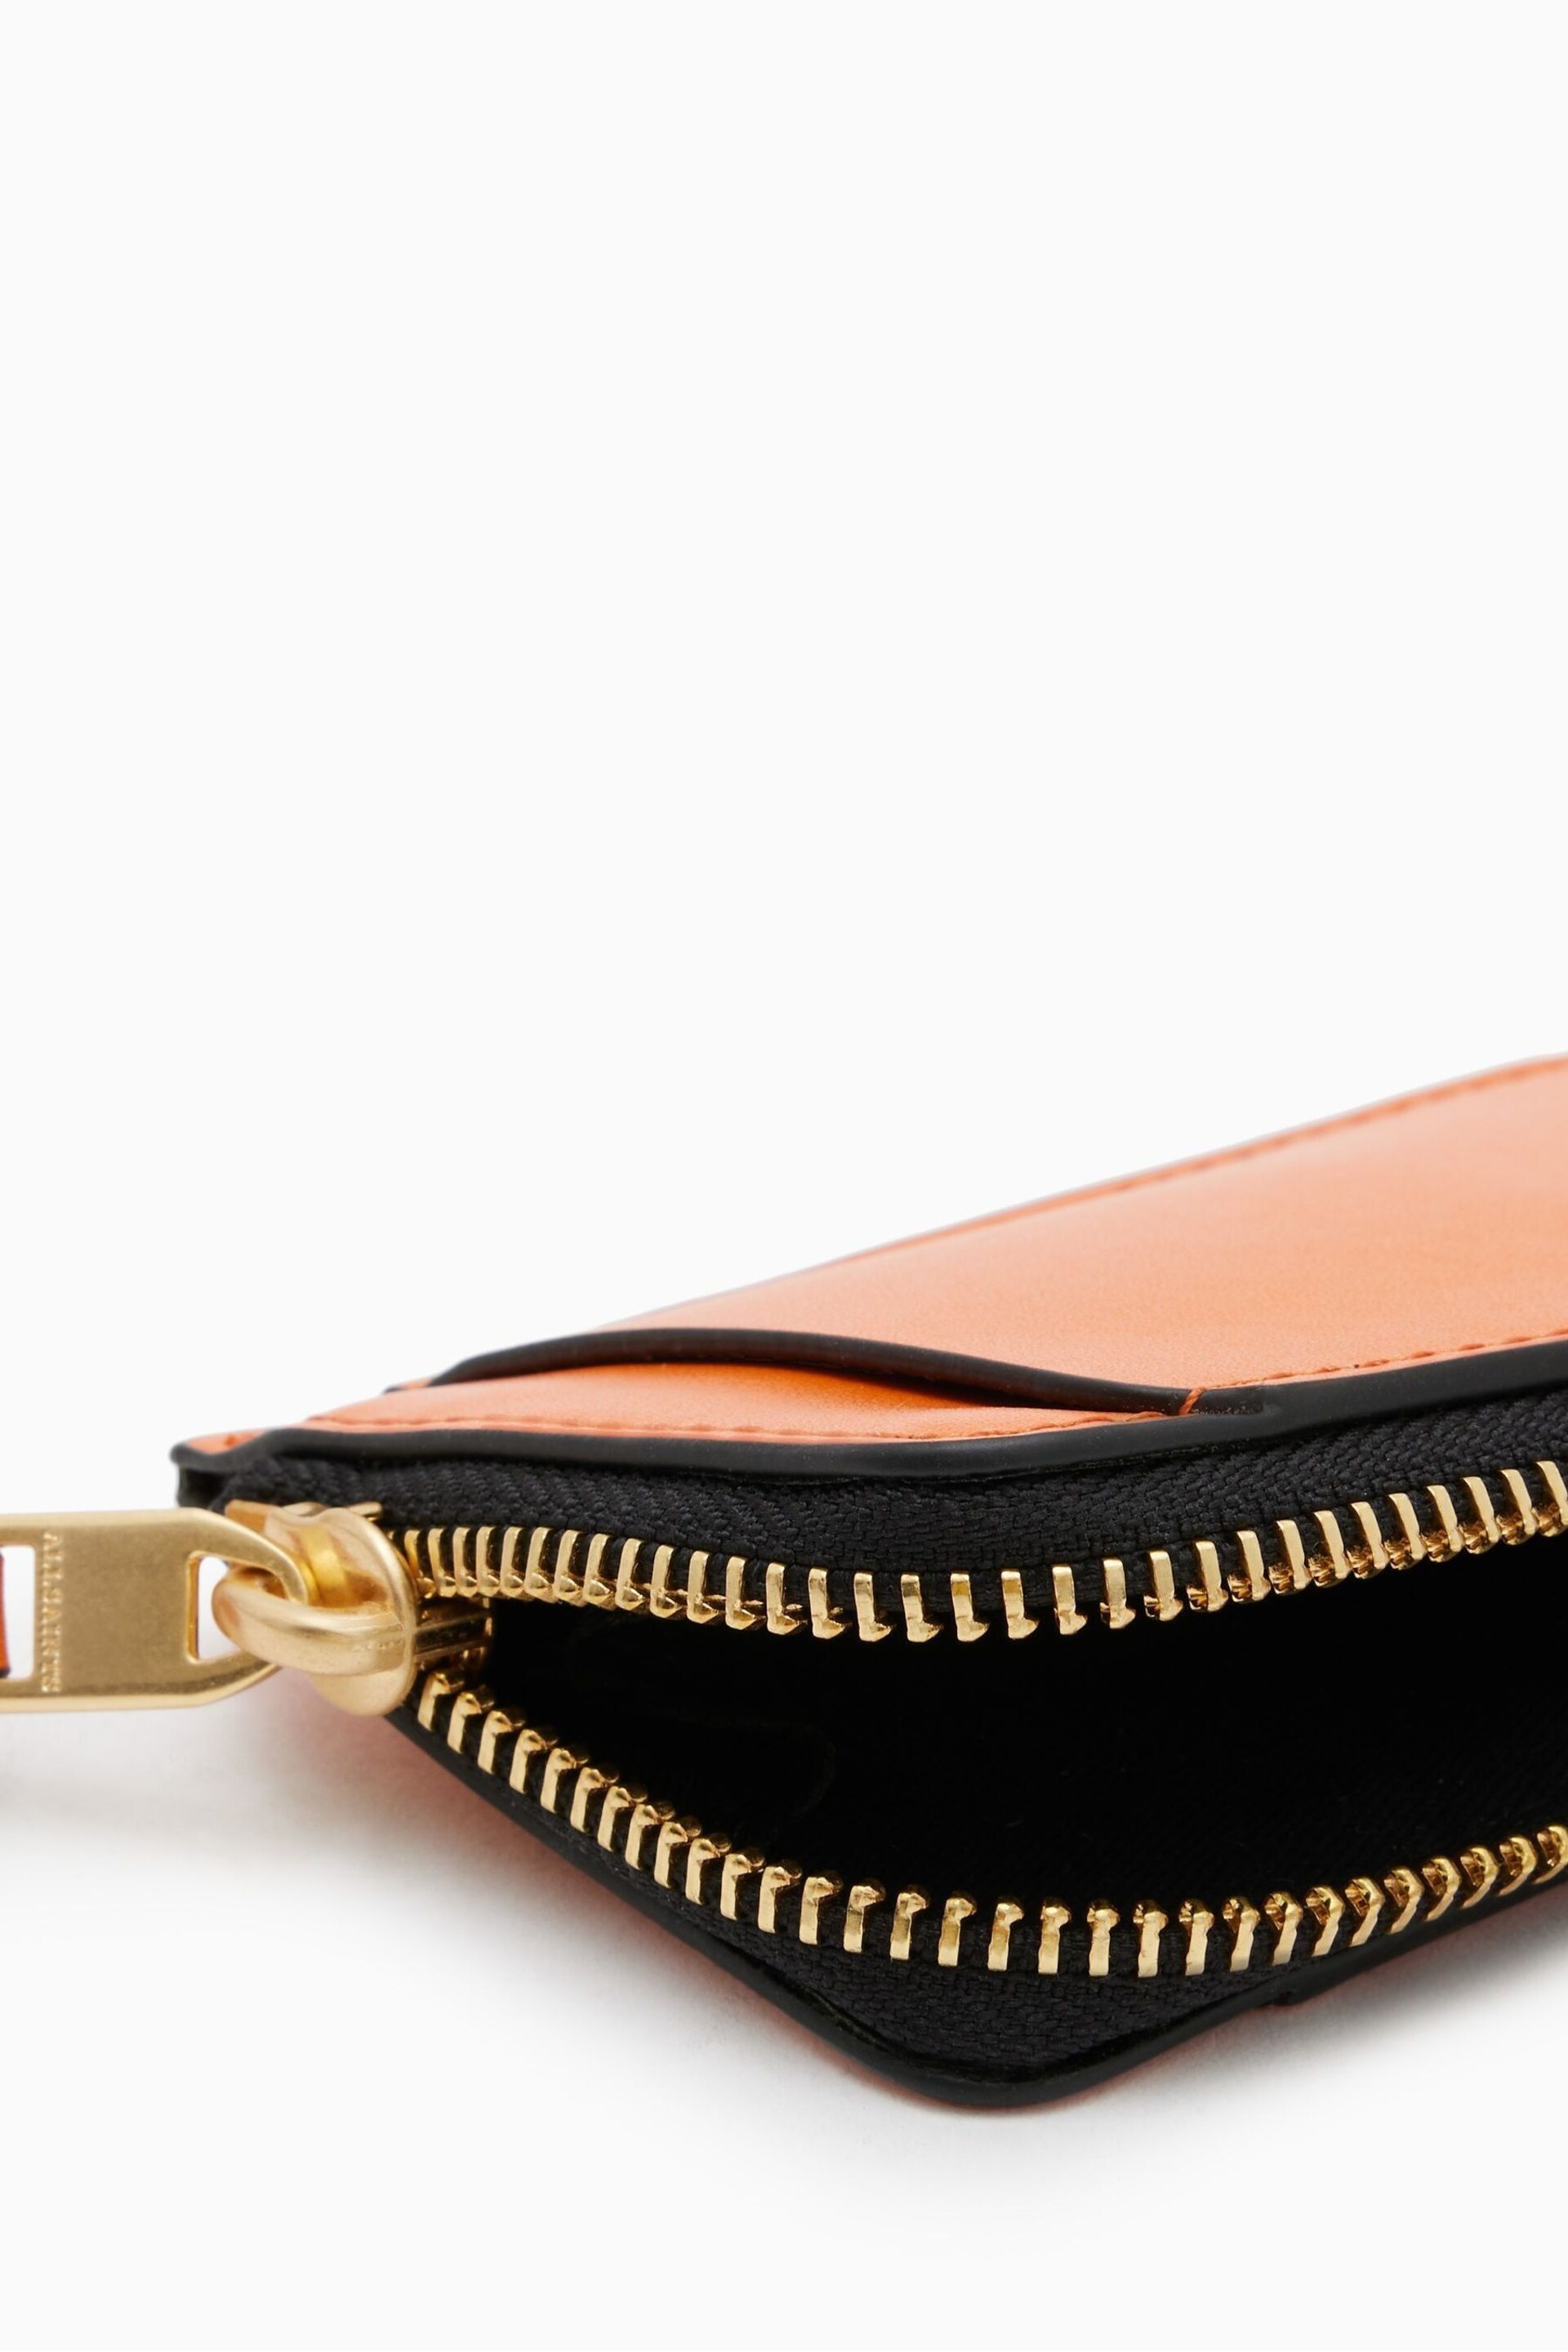 AllSaints Orange Remy Wallet - Image 4 of 6